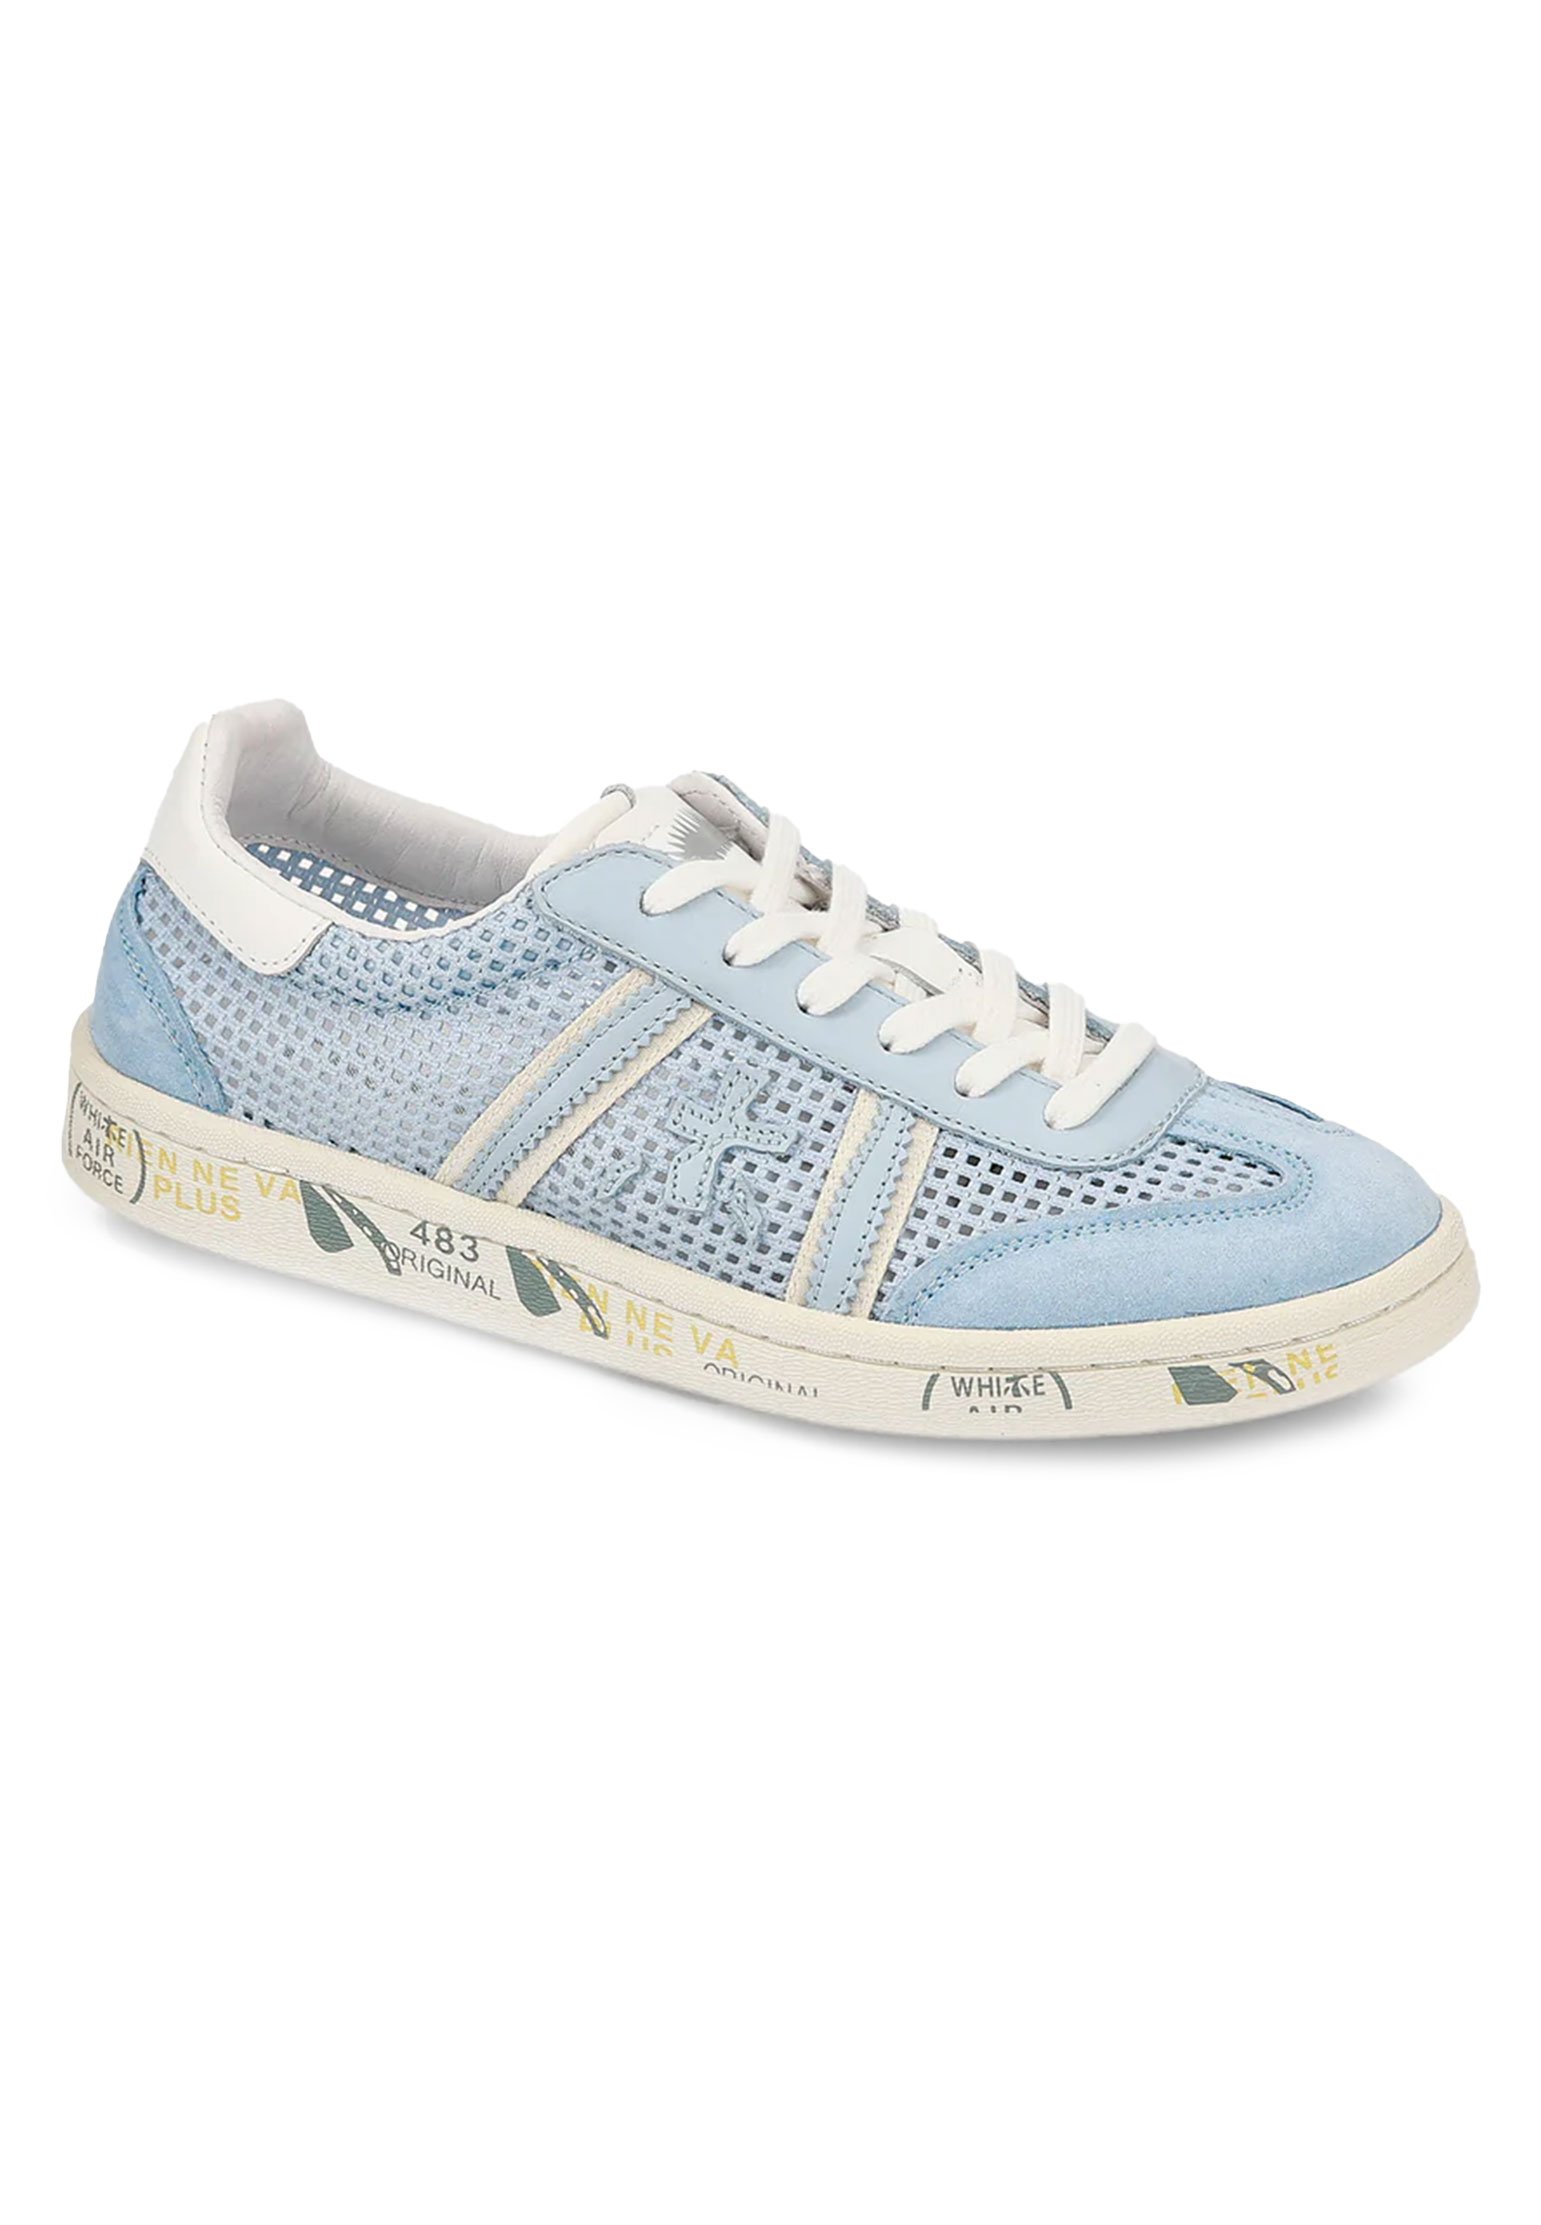 Sneakers PREMIATA Color: light blue (Code: 4193) in online store Allure